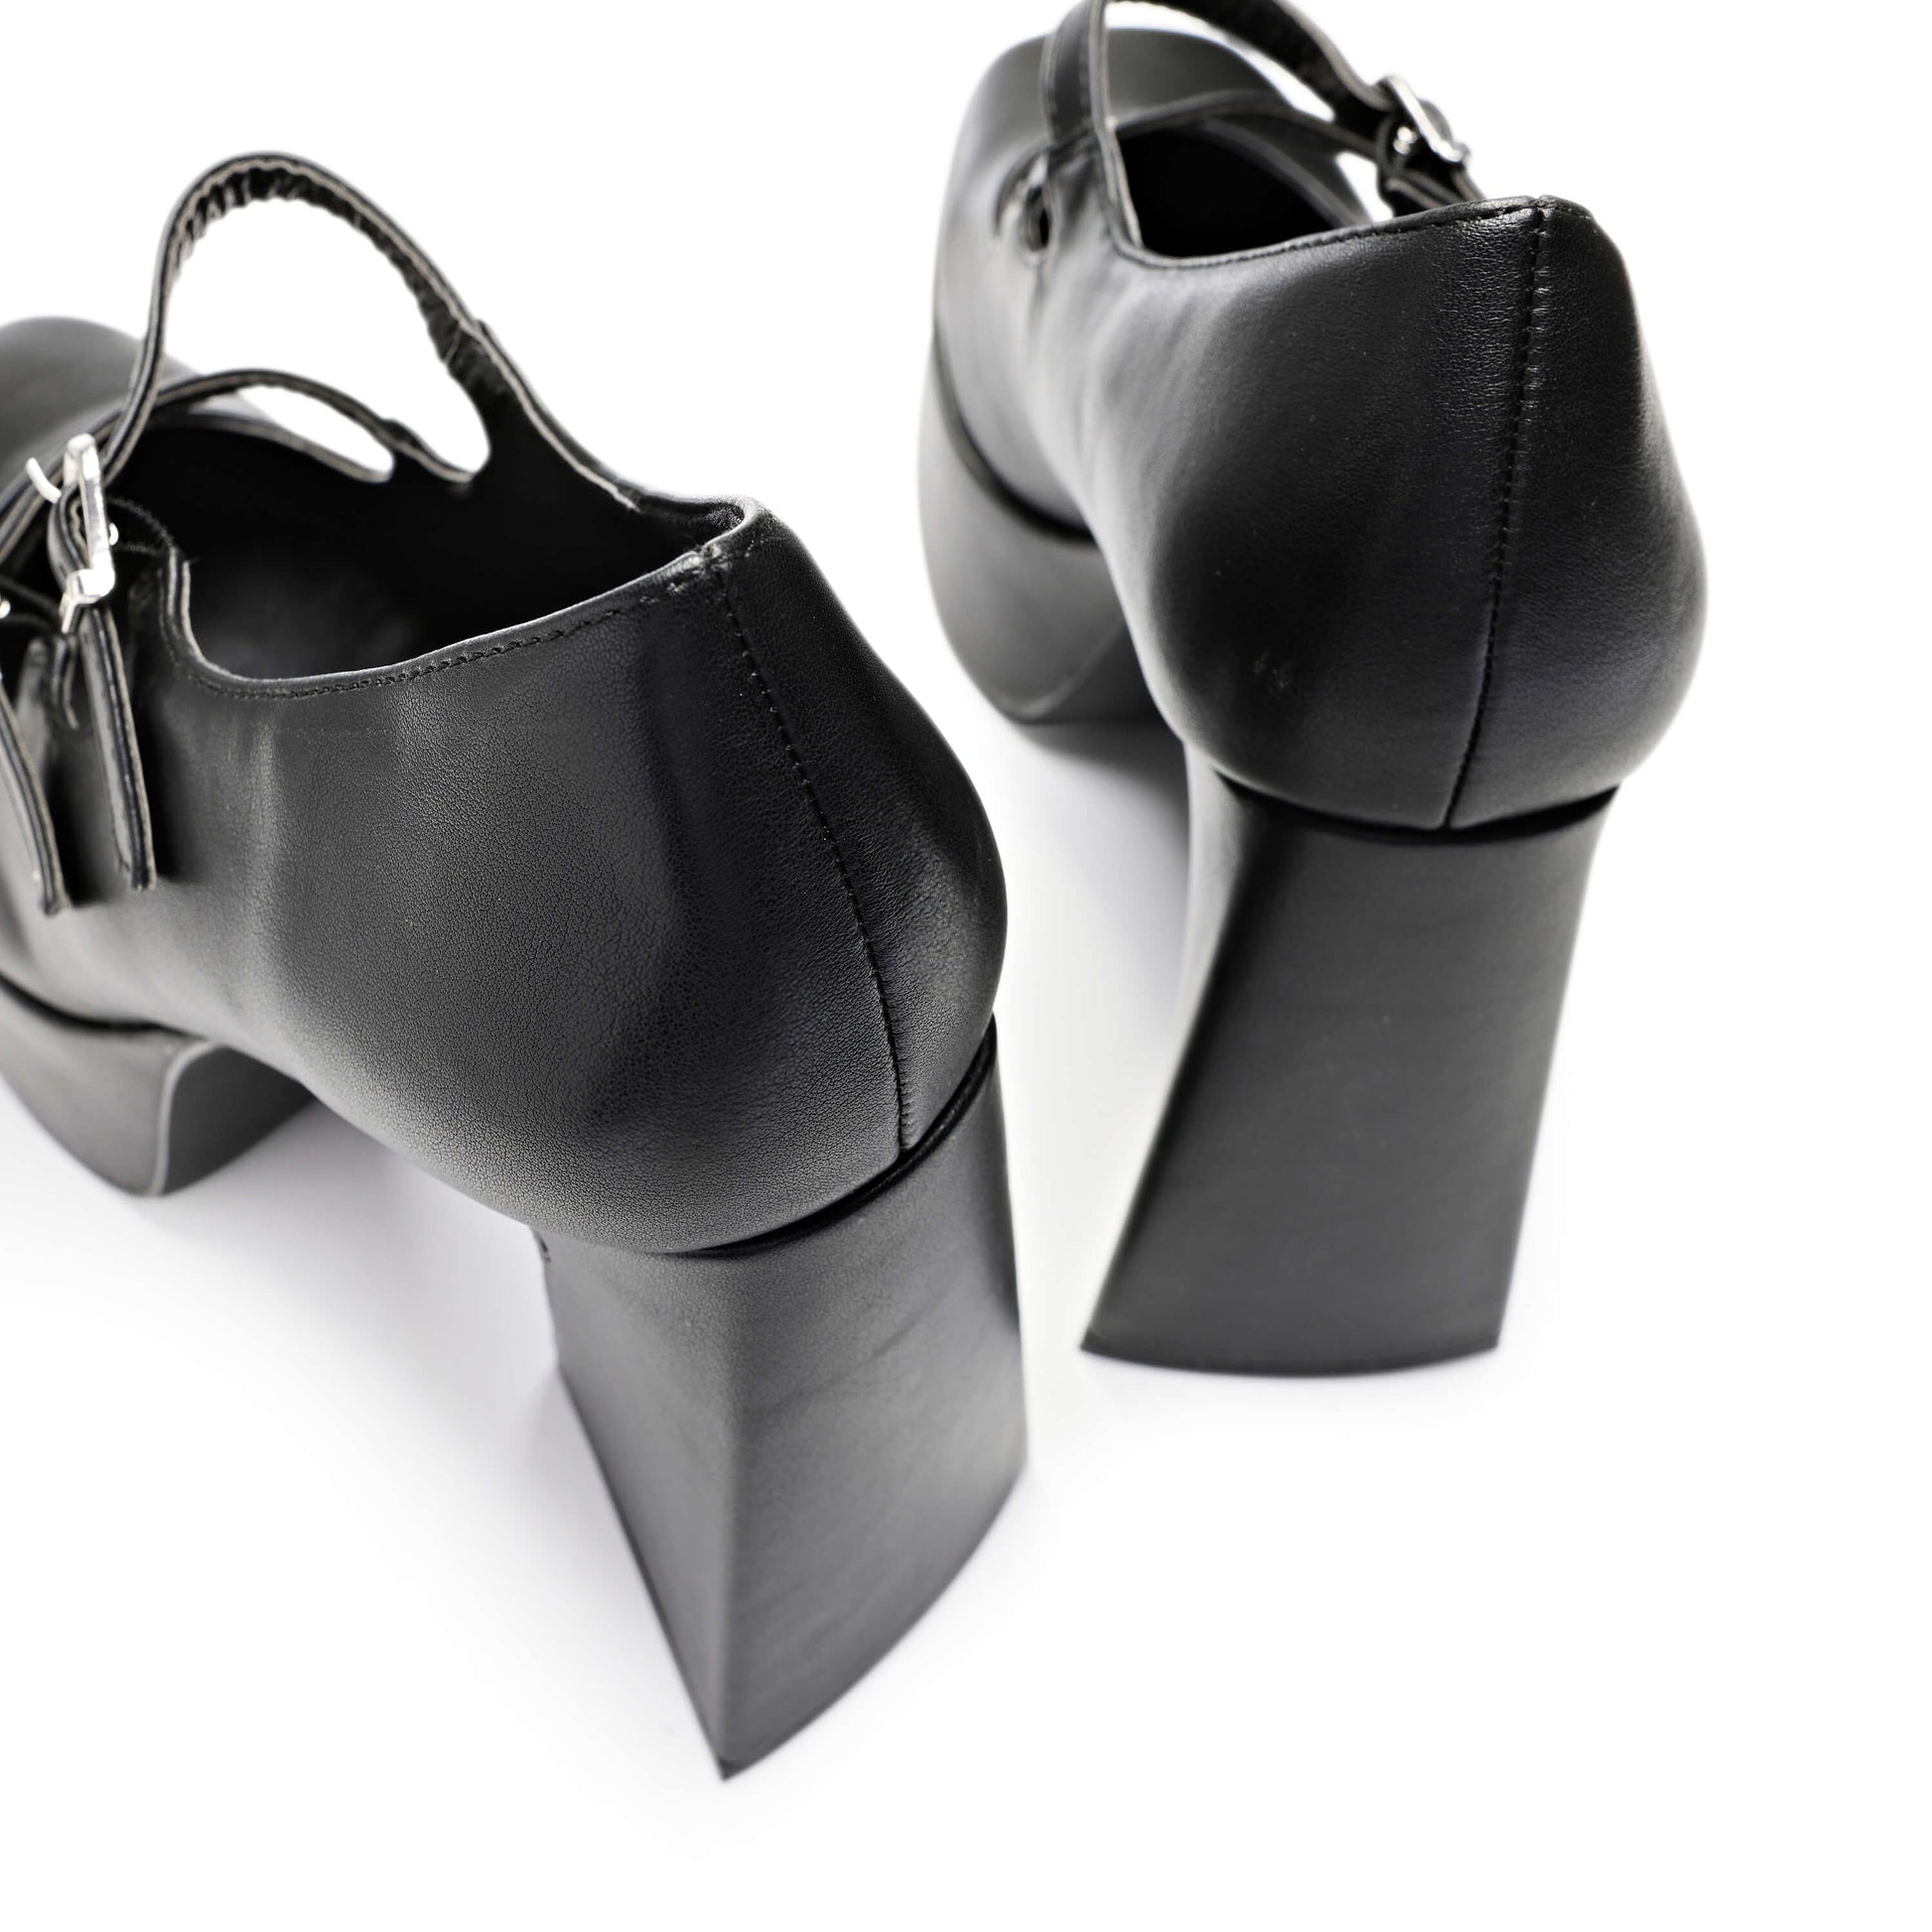 Zeba Black Platform Heels - Shoes - KOI Footwear - Black - Back Top Detail